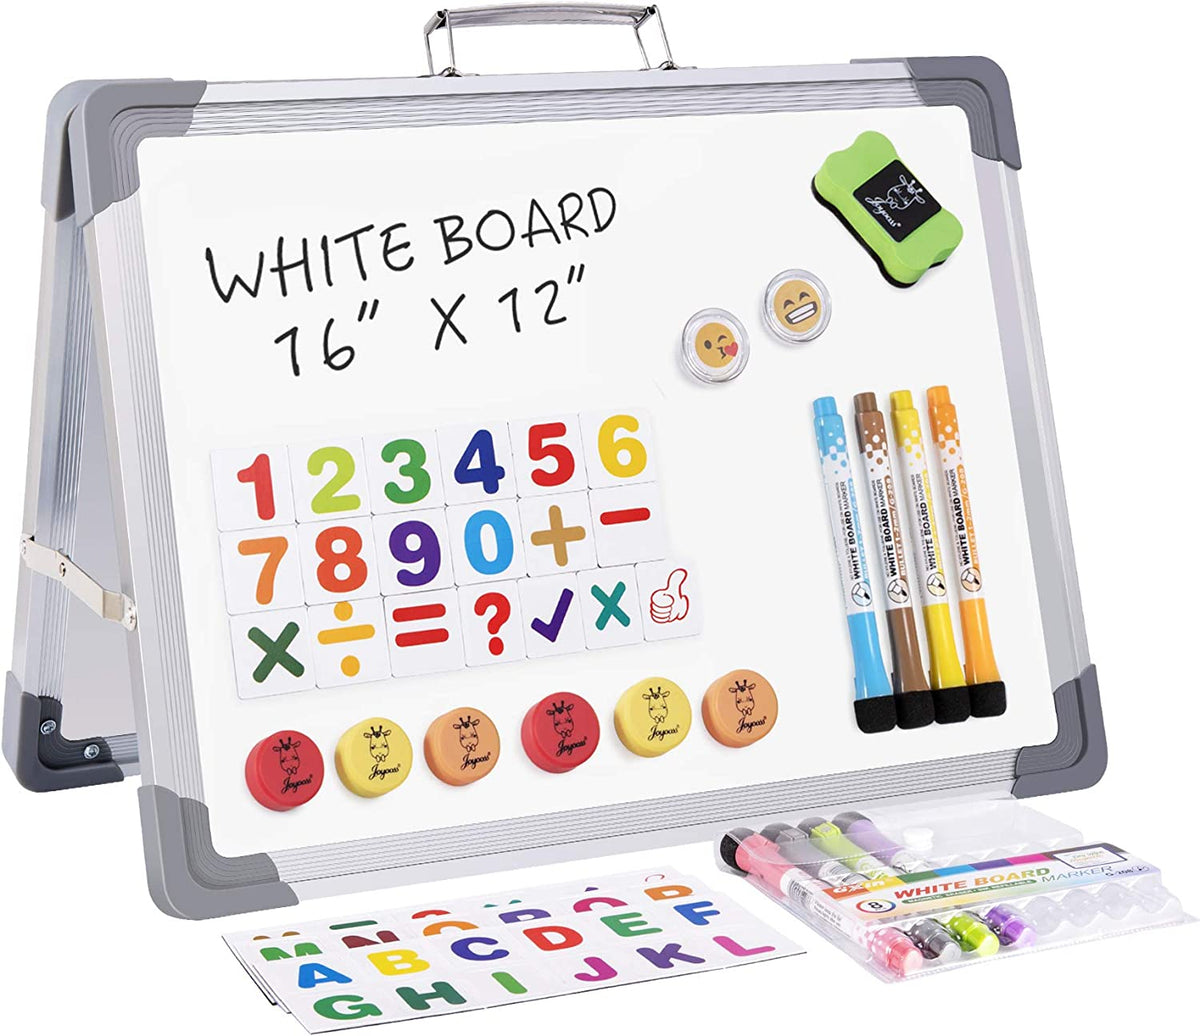  School Smart Chalkboard and Dry Erase Marker Drafting